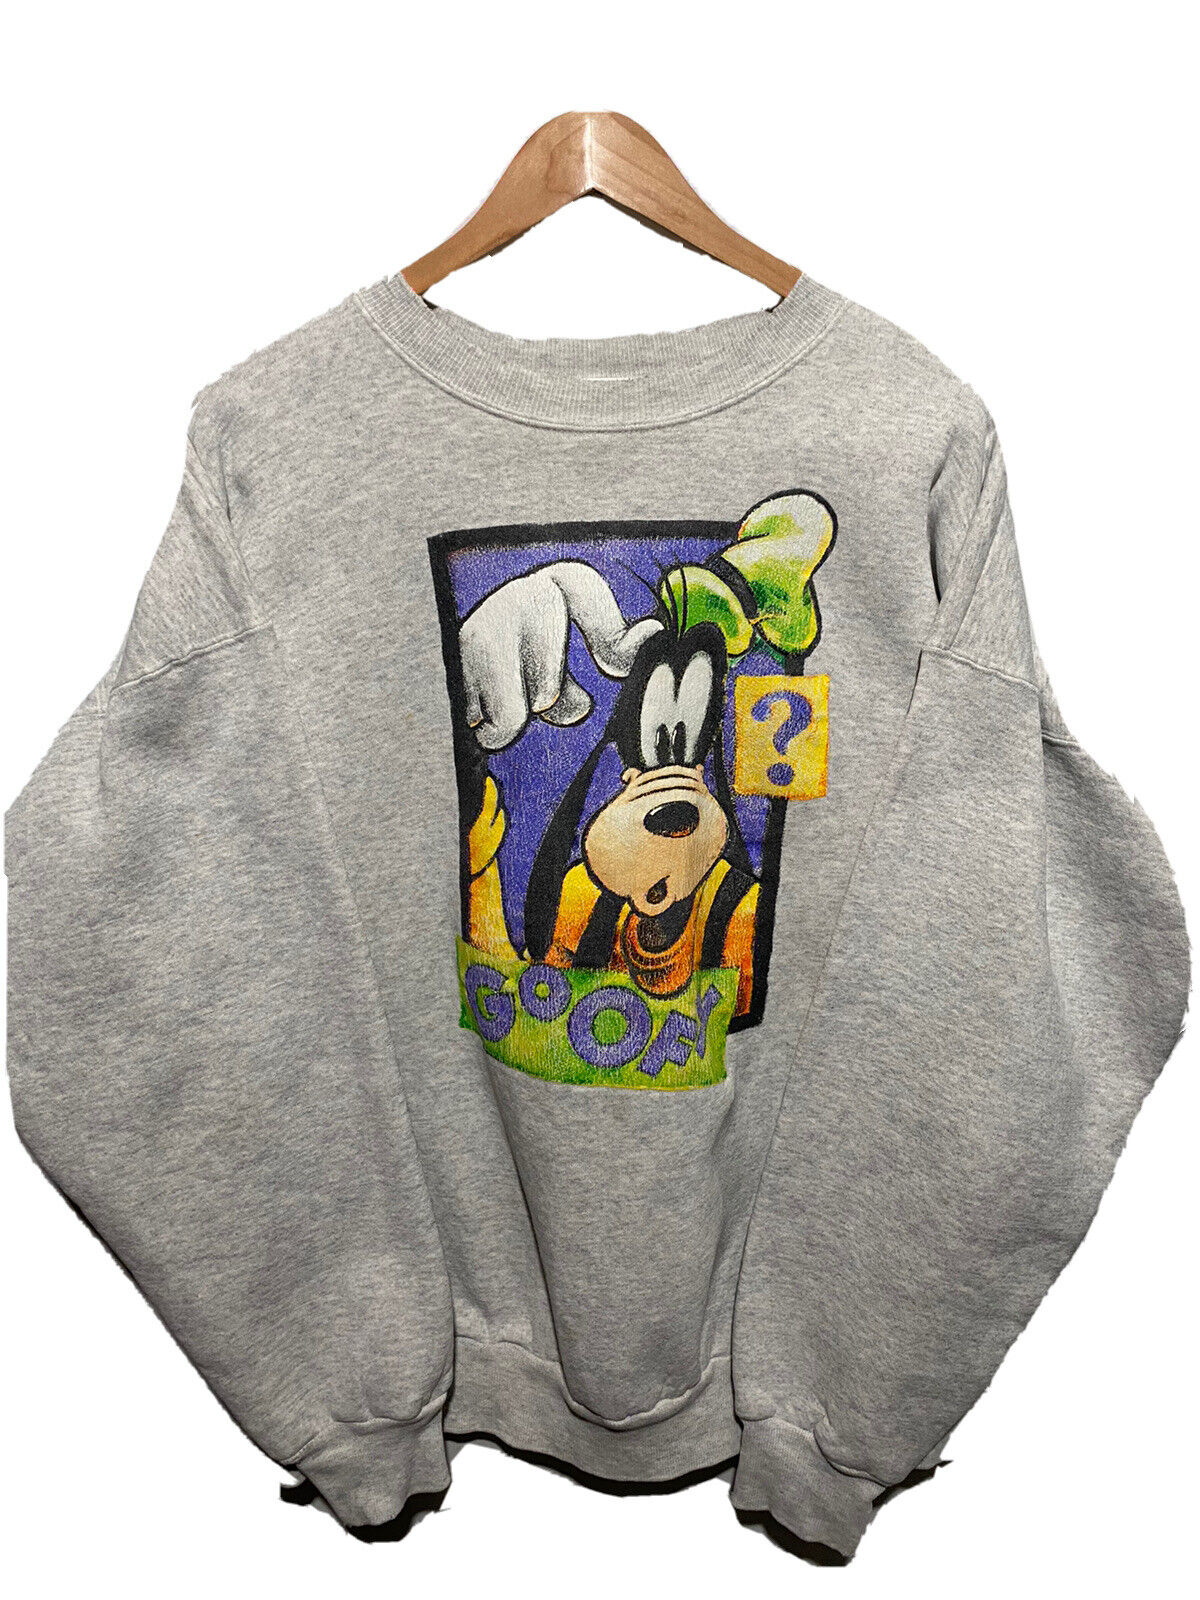 Vintage Mickey Inc Disney Crewneck Sweatshirt Goofy Sz XL Gray Made In USA